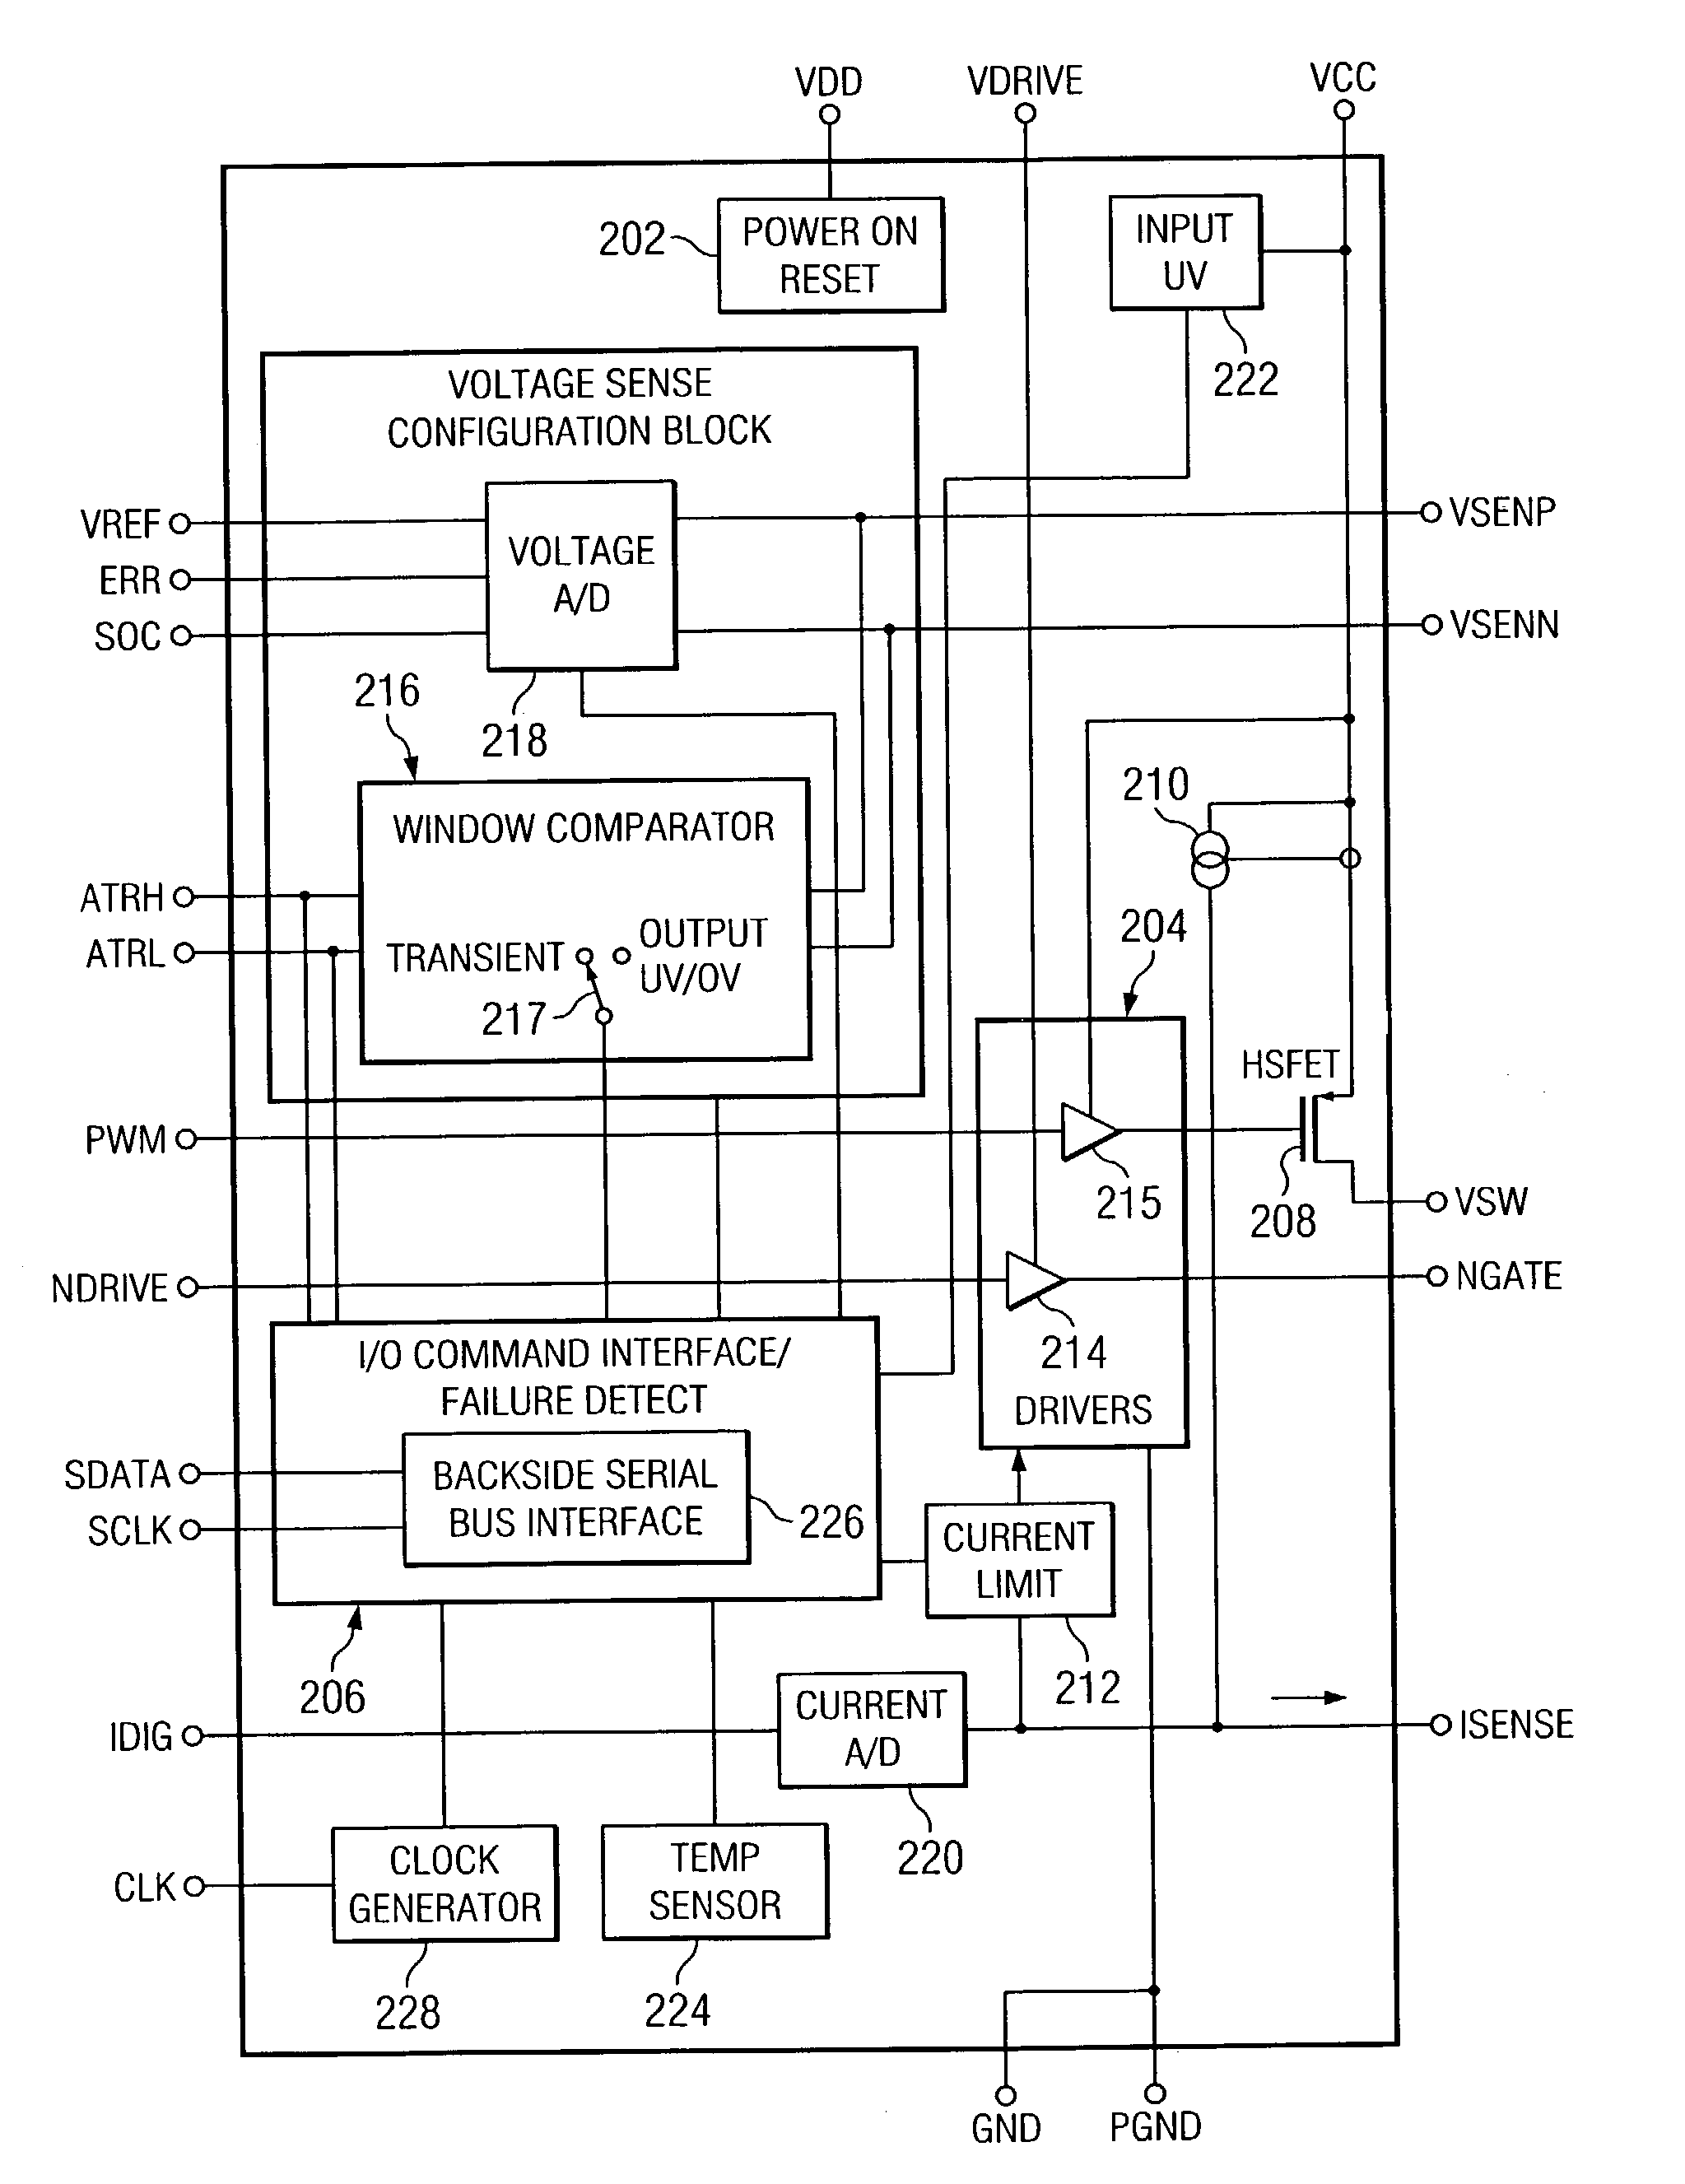 Digitally controlled voltage regulator